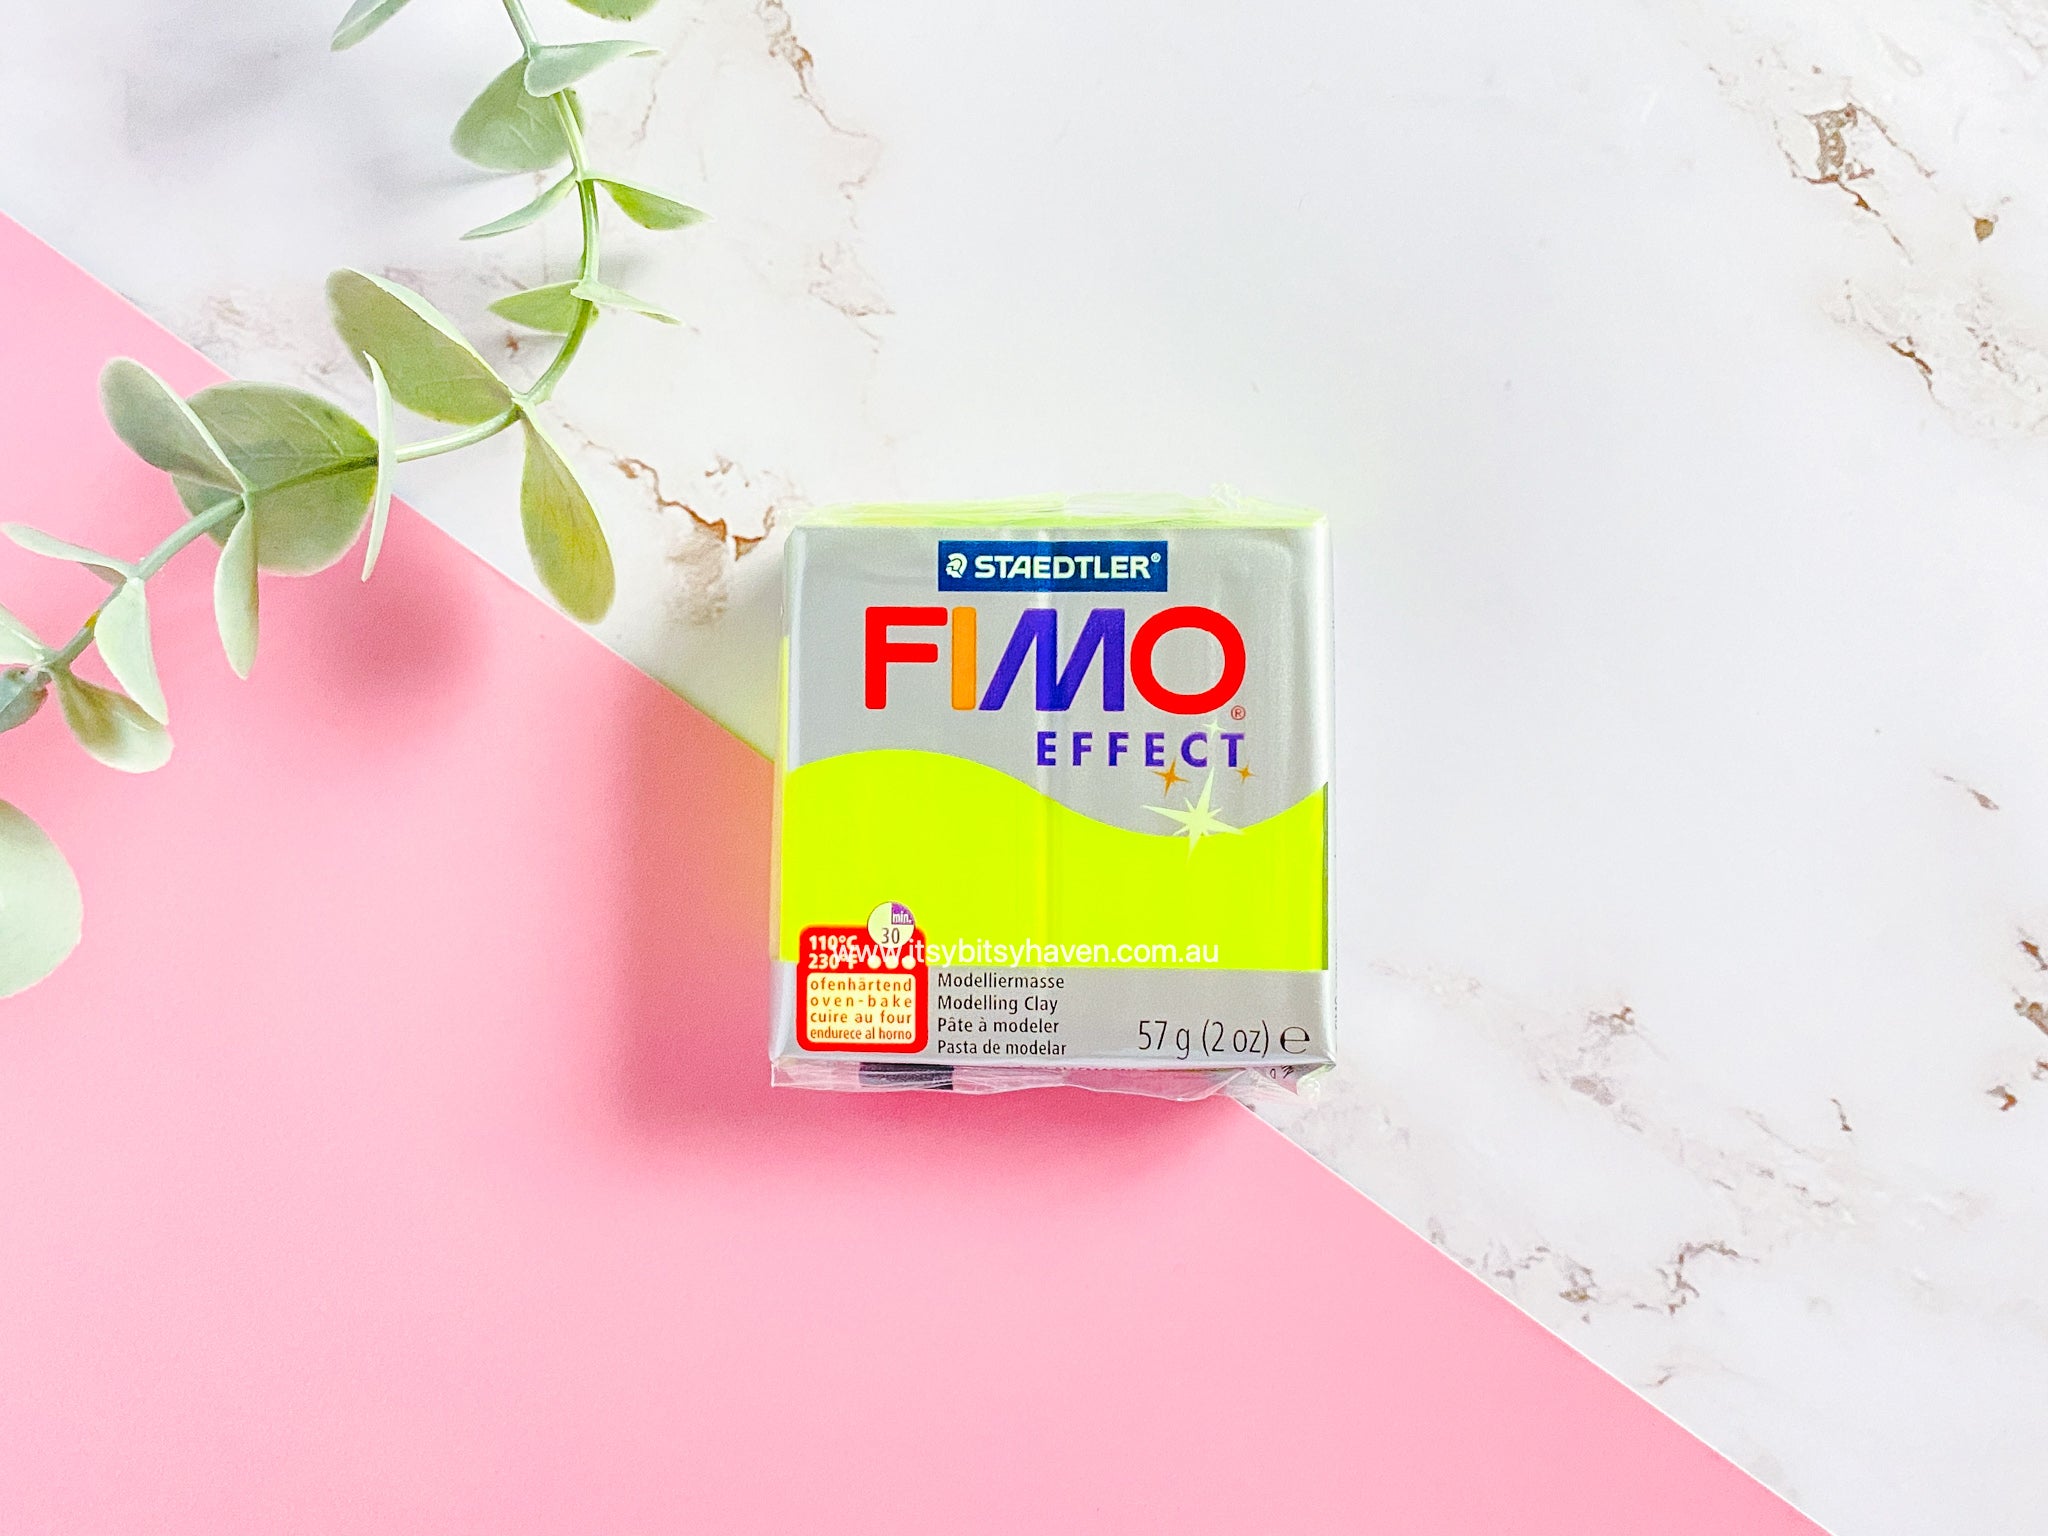 FIMO SOFT 57 G 2 Oz Polymer Clay Choose Your Colour 